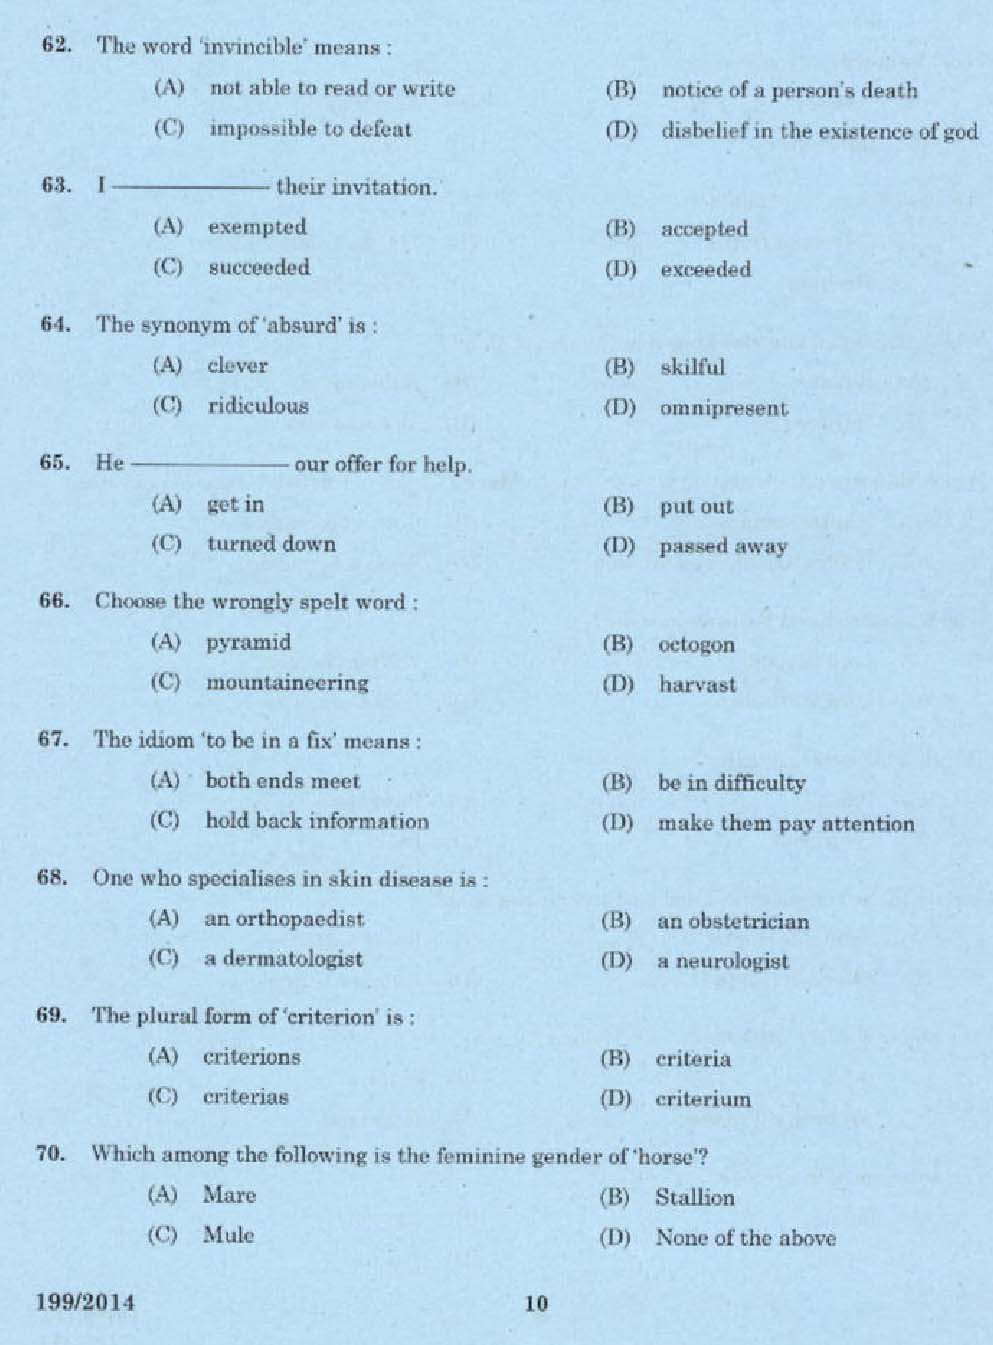 Kerala PSC Cine Assistant Exam Question Code 1992014 8